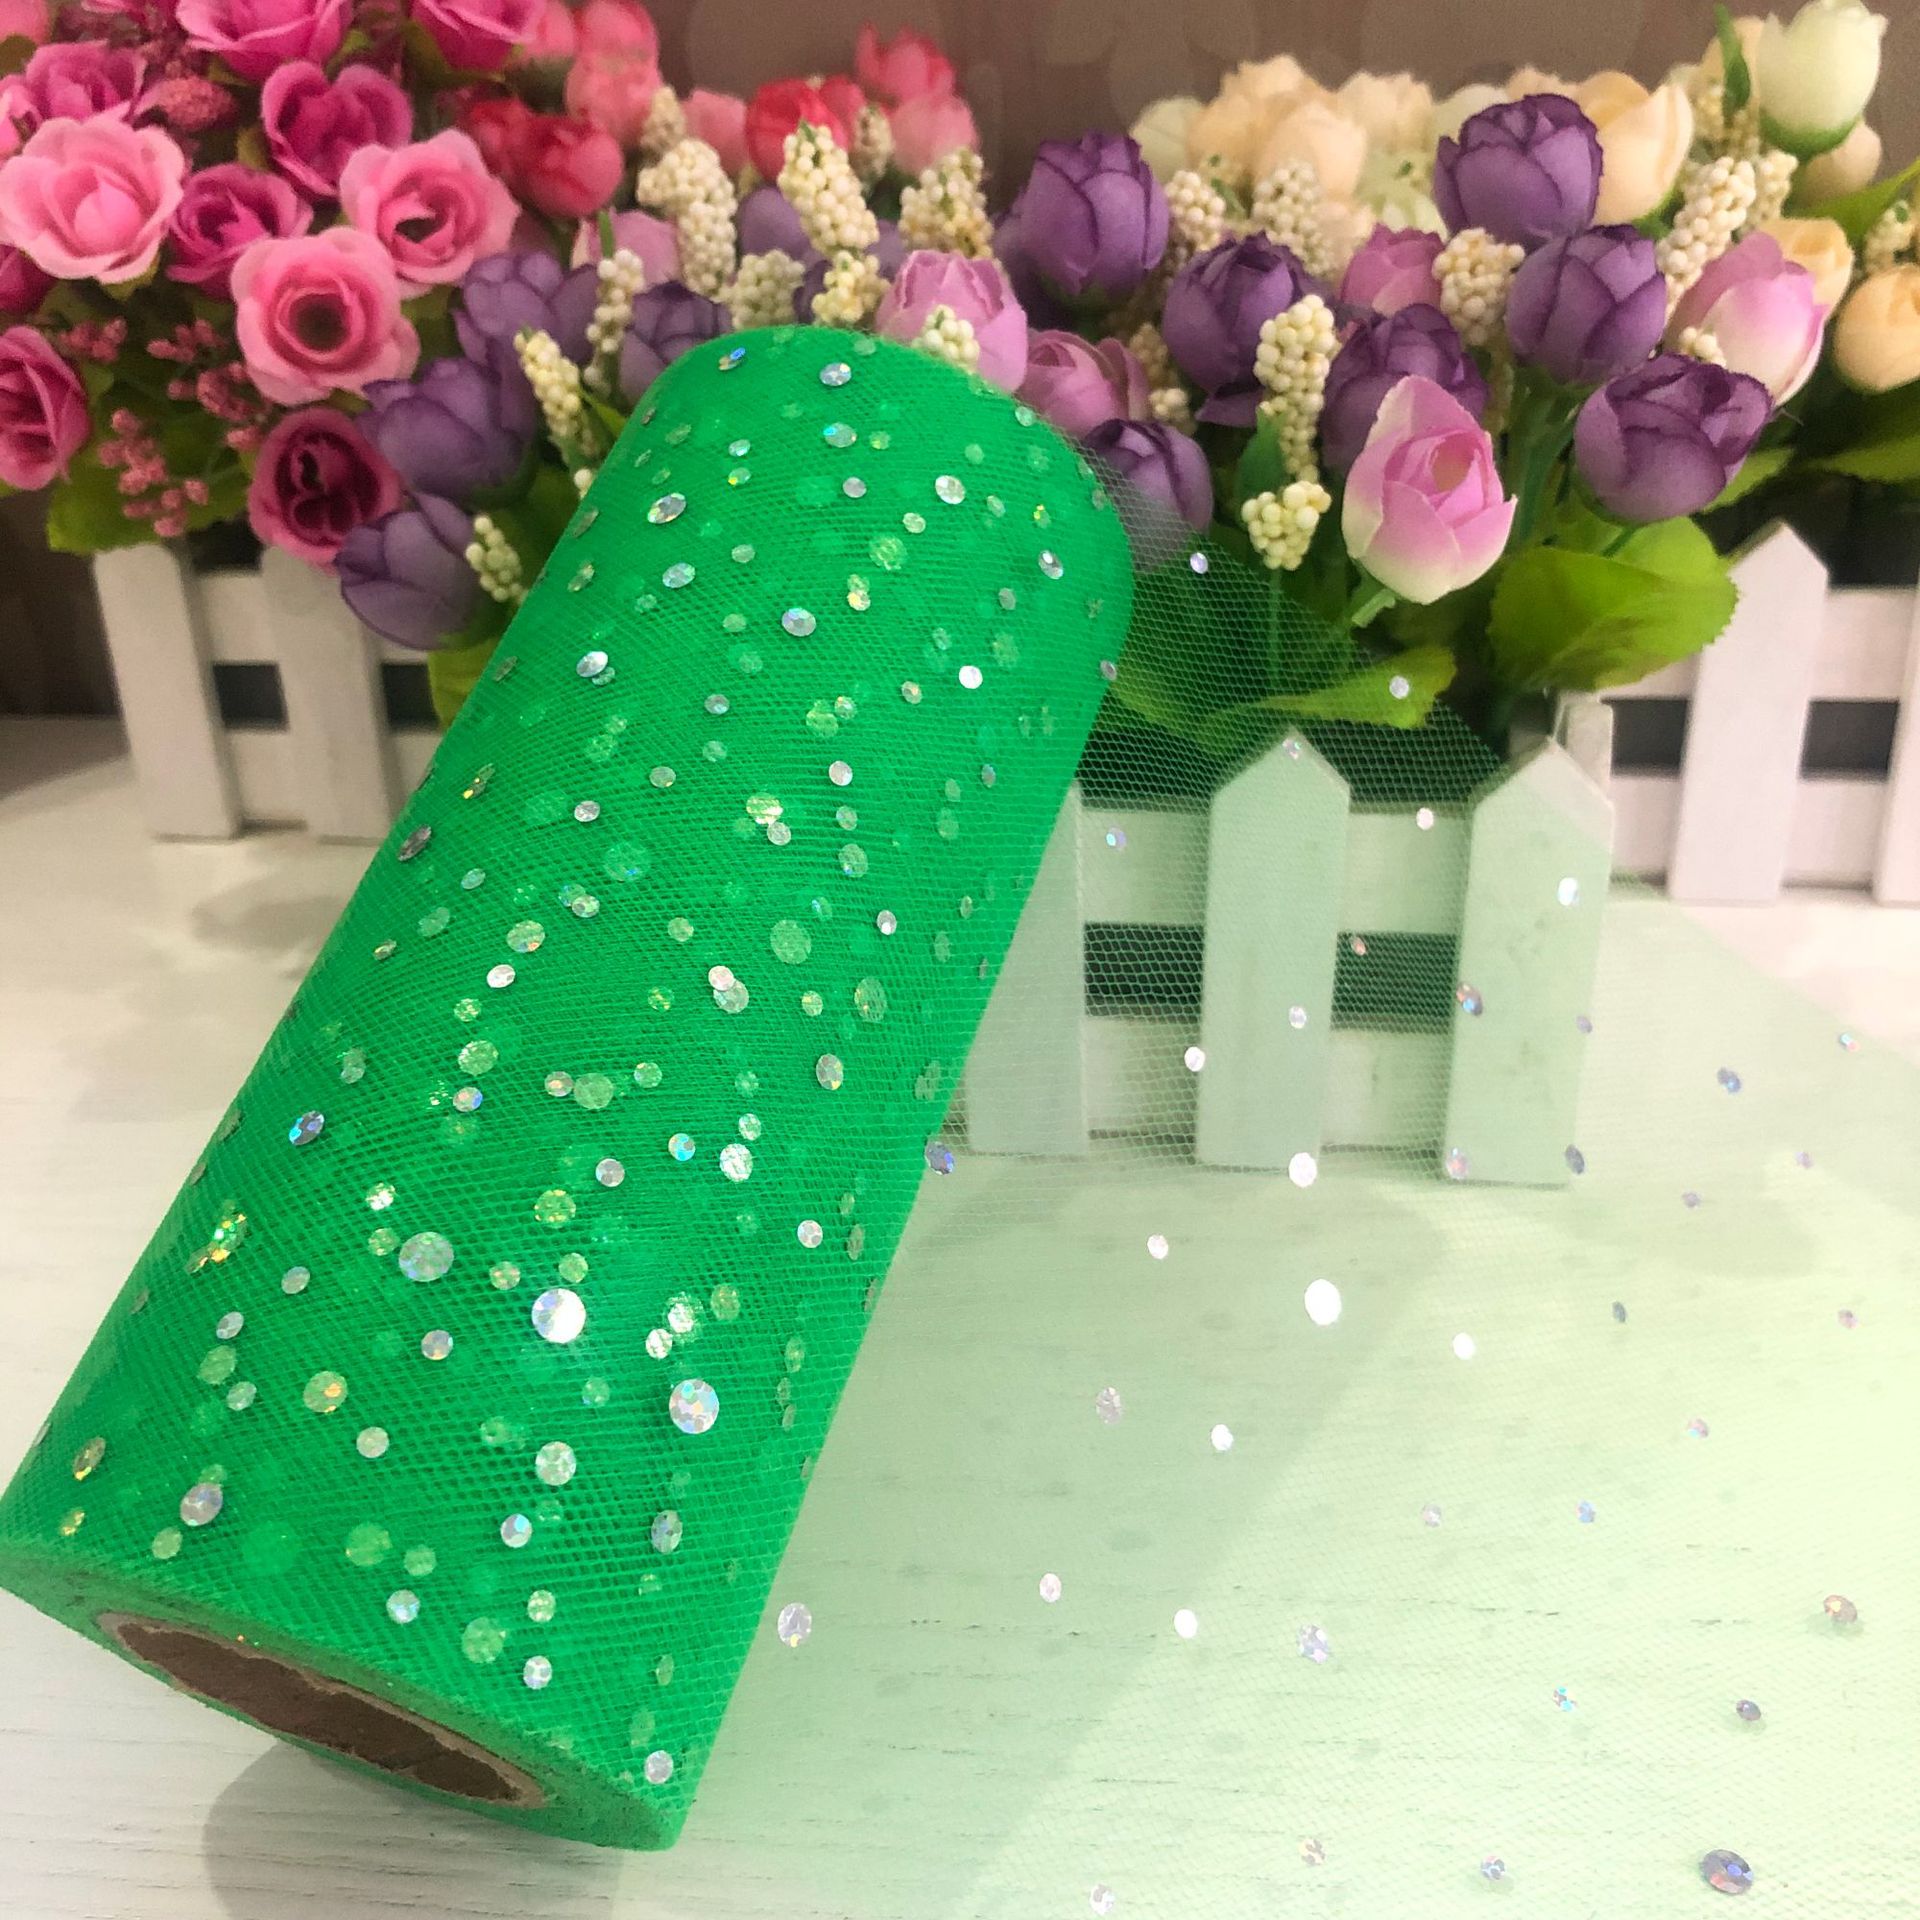 6x10 Yards Apple Green Elaborate Design Glitter Organza Tulle